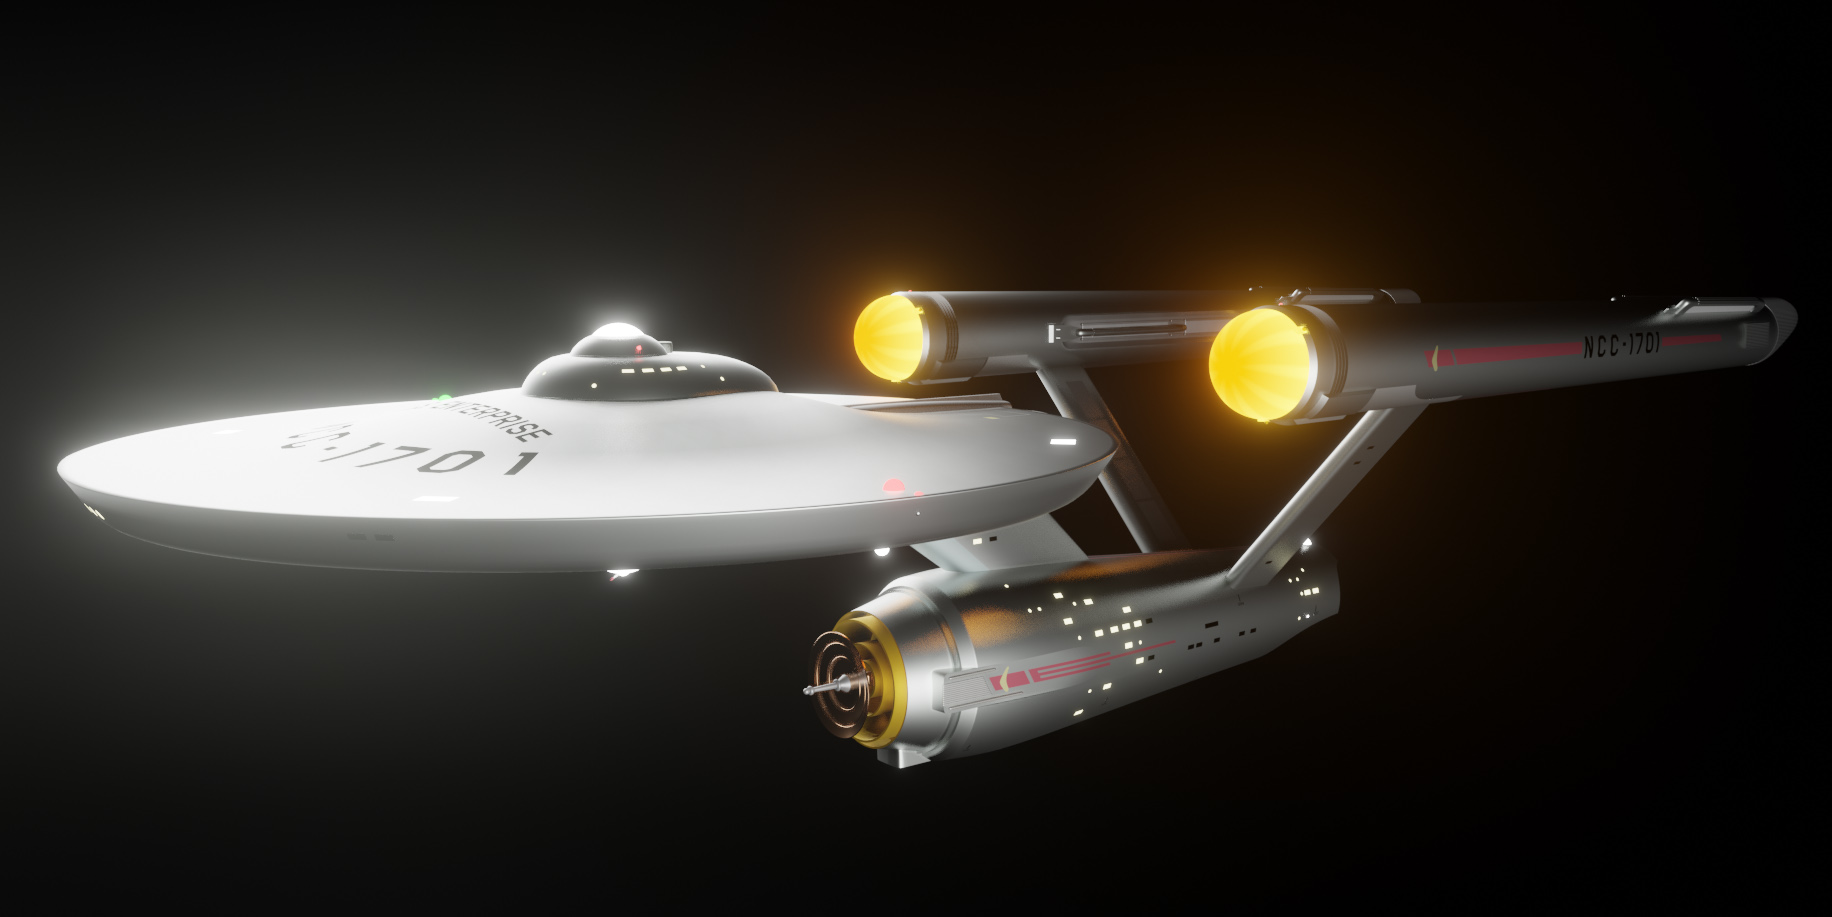 Star Trek TOS Enterprise